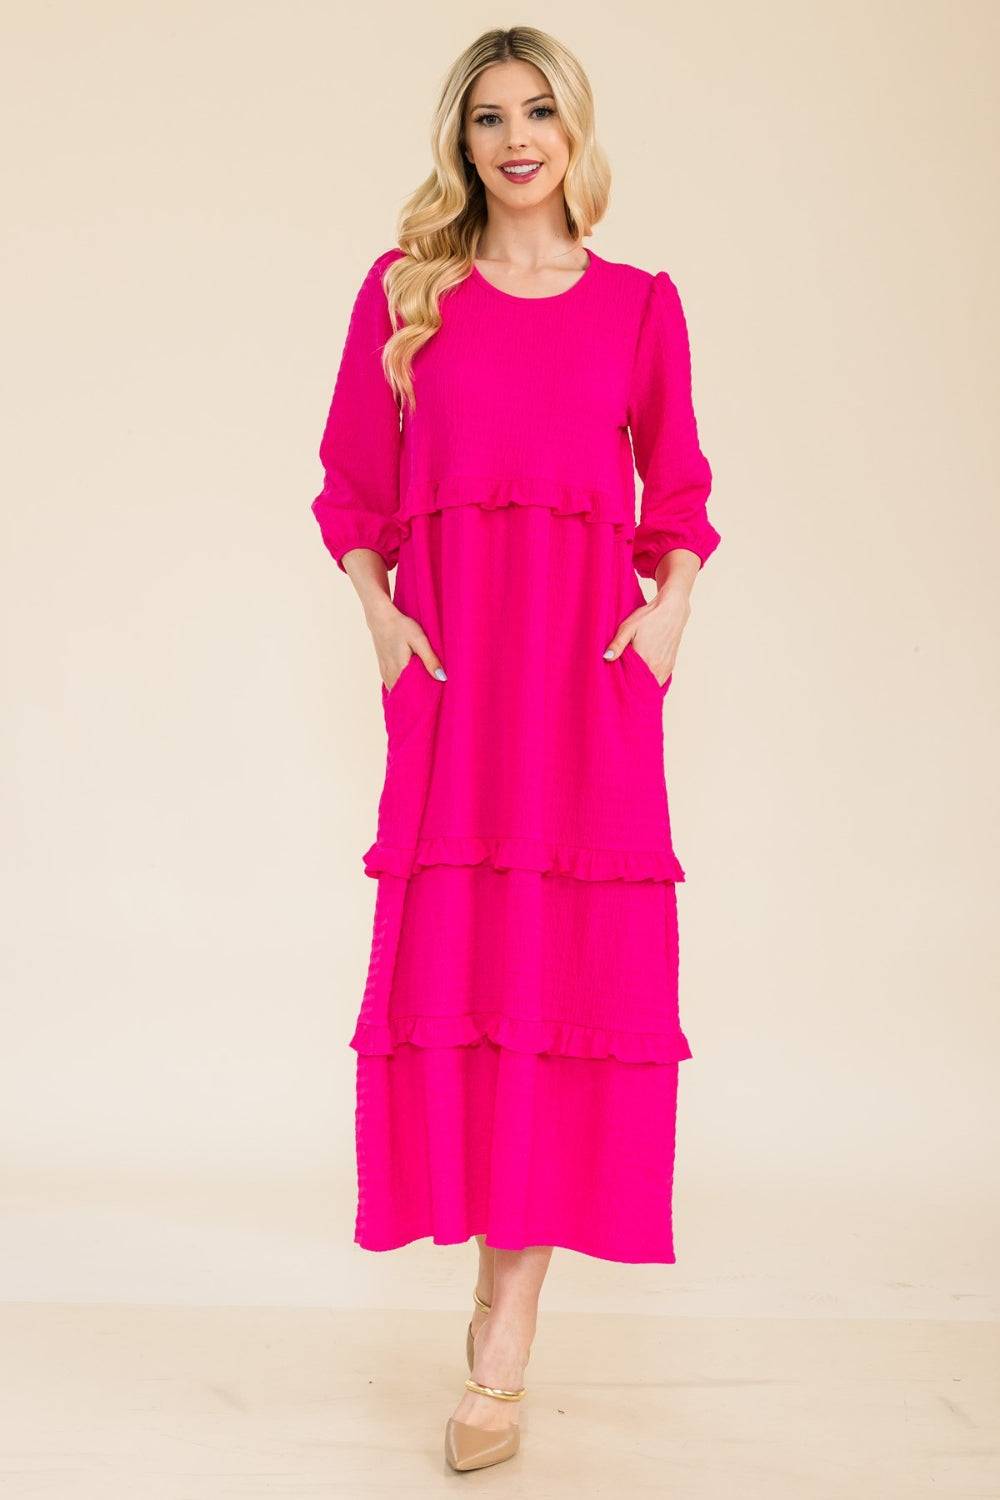 a woman wearing a bright pink dress